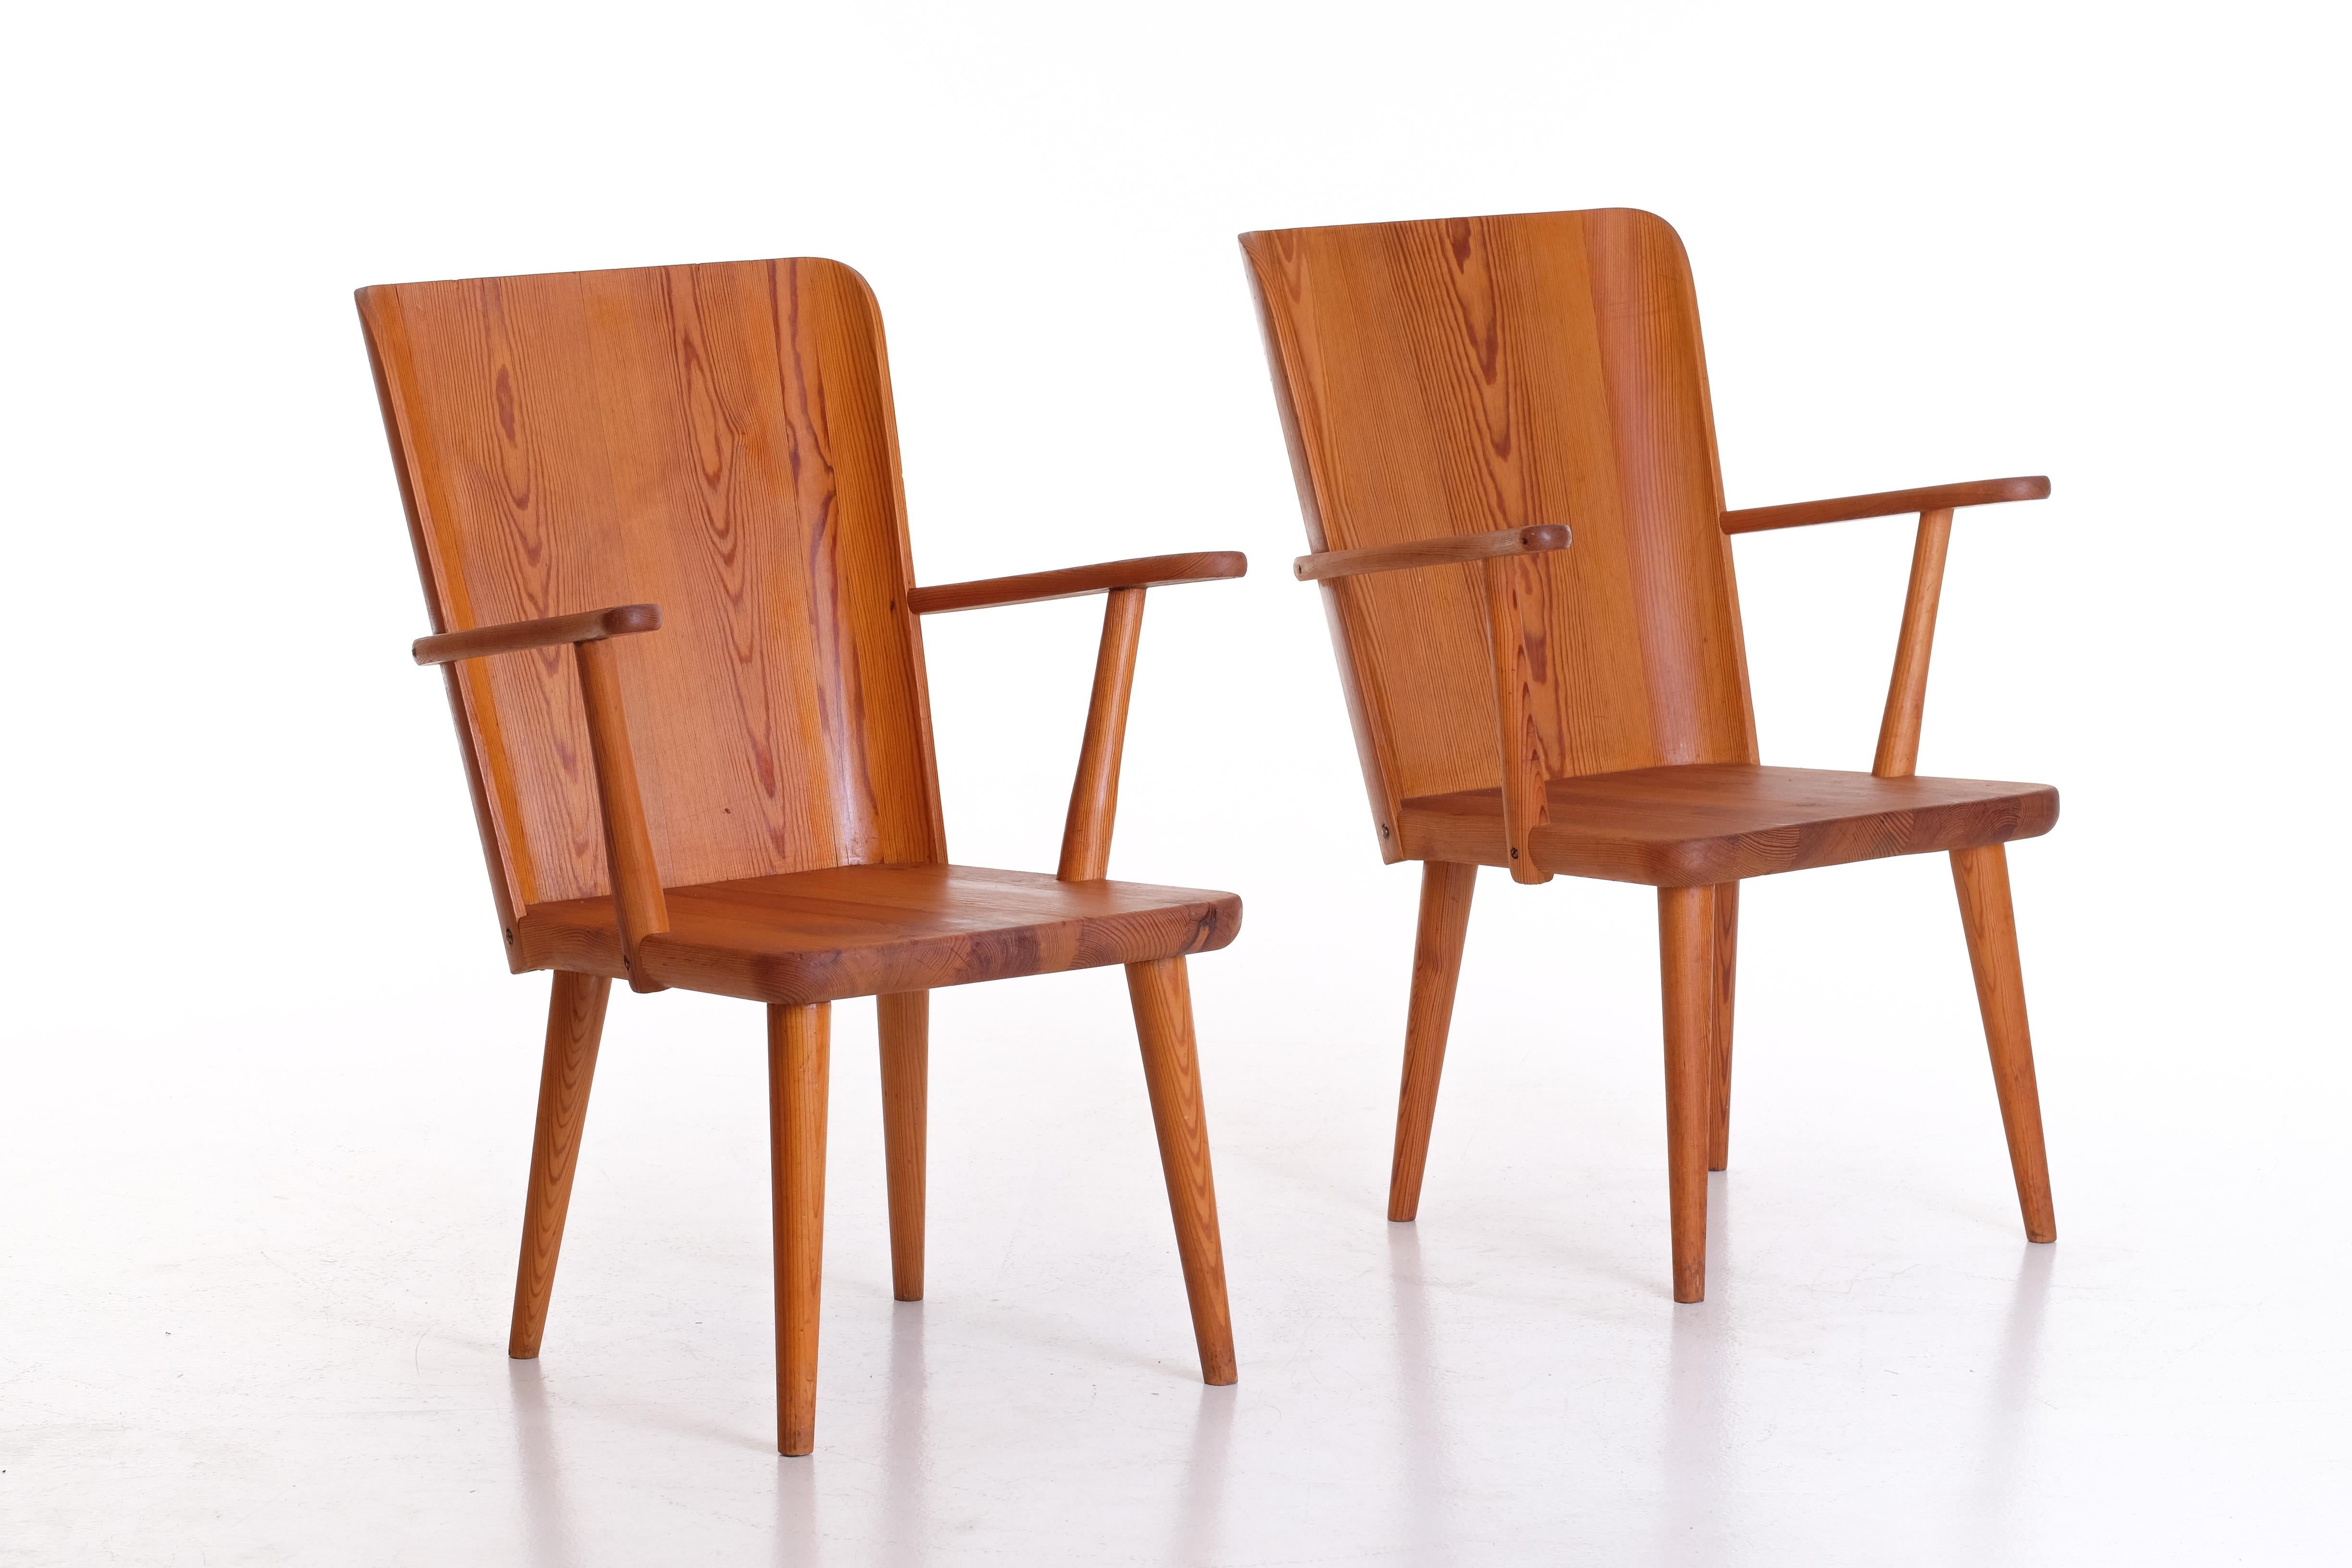 Scandinavian Modern Pair of Swedish Pine Chairs by Göran Malmvall, 1950s For Sale